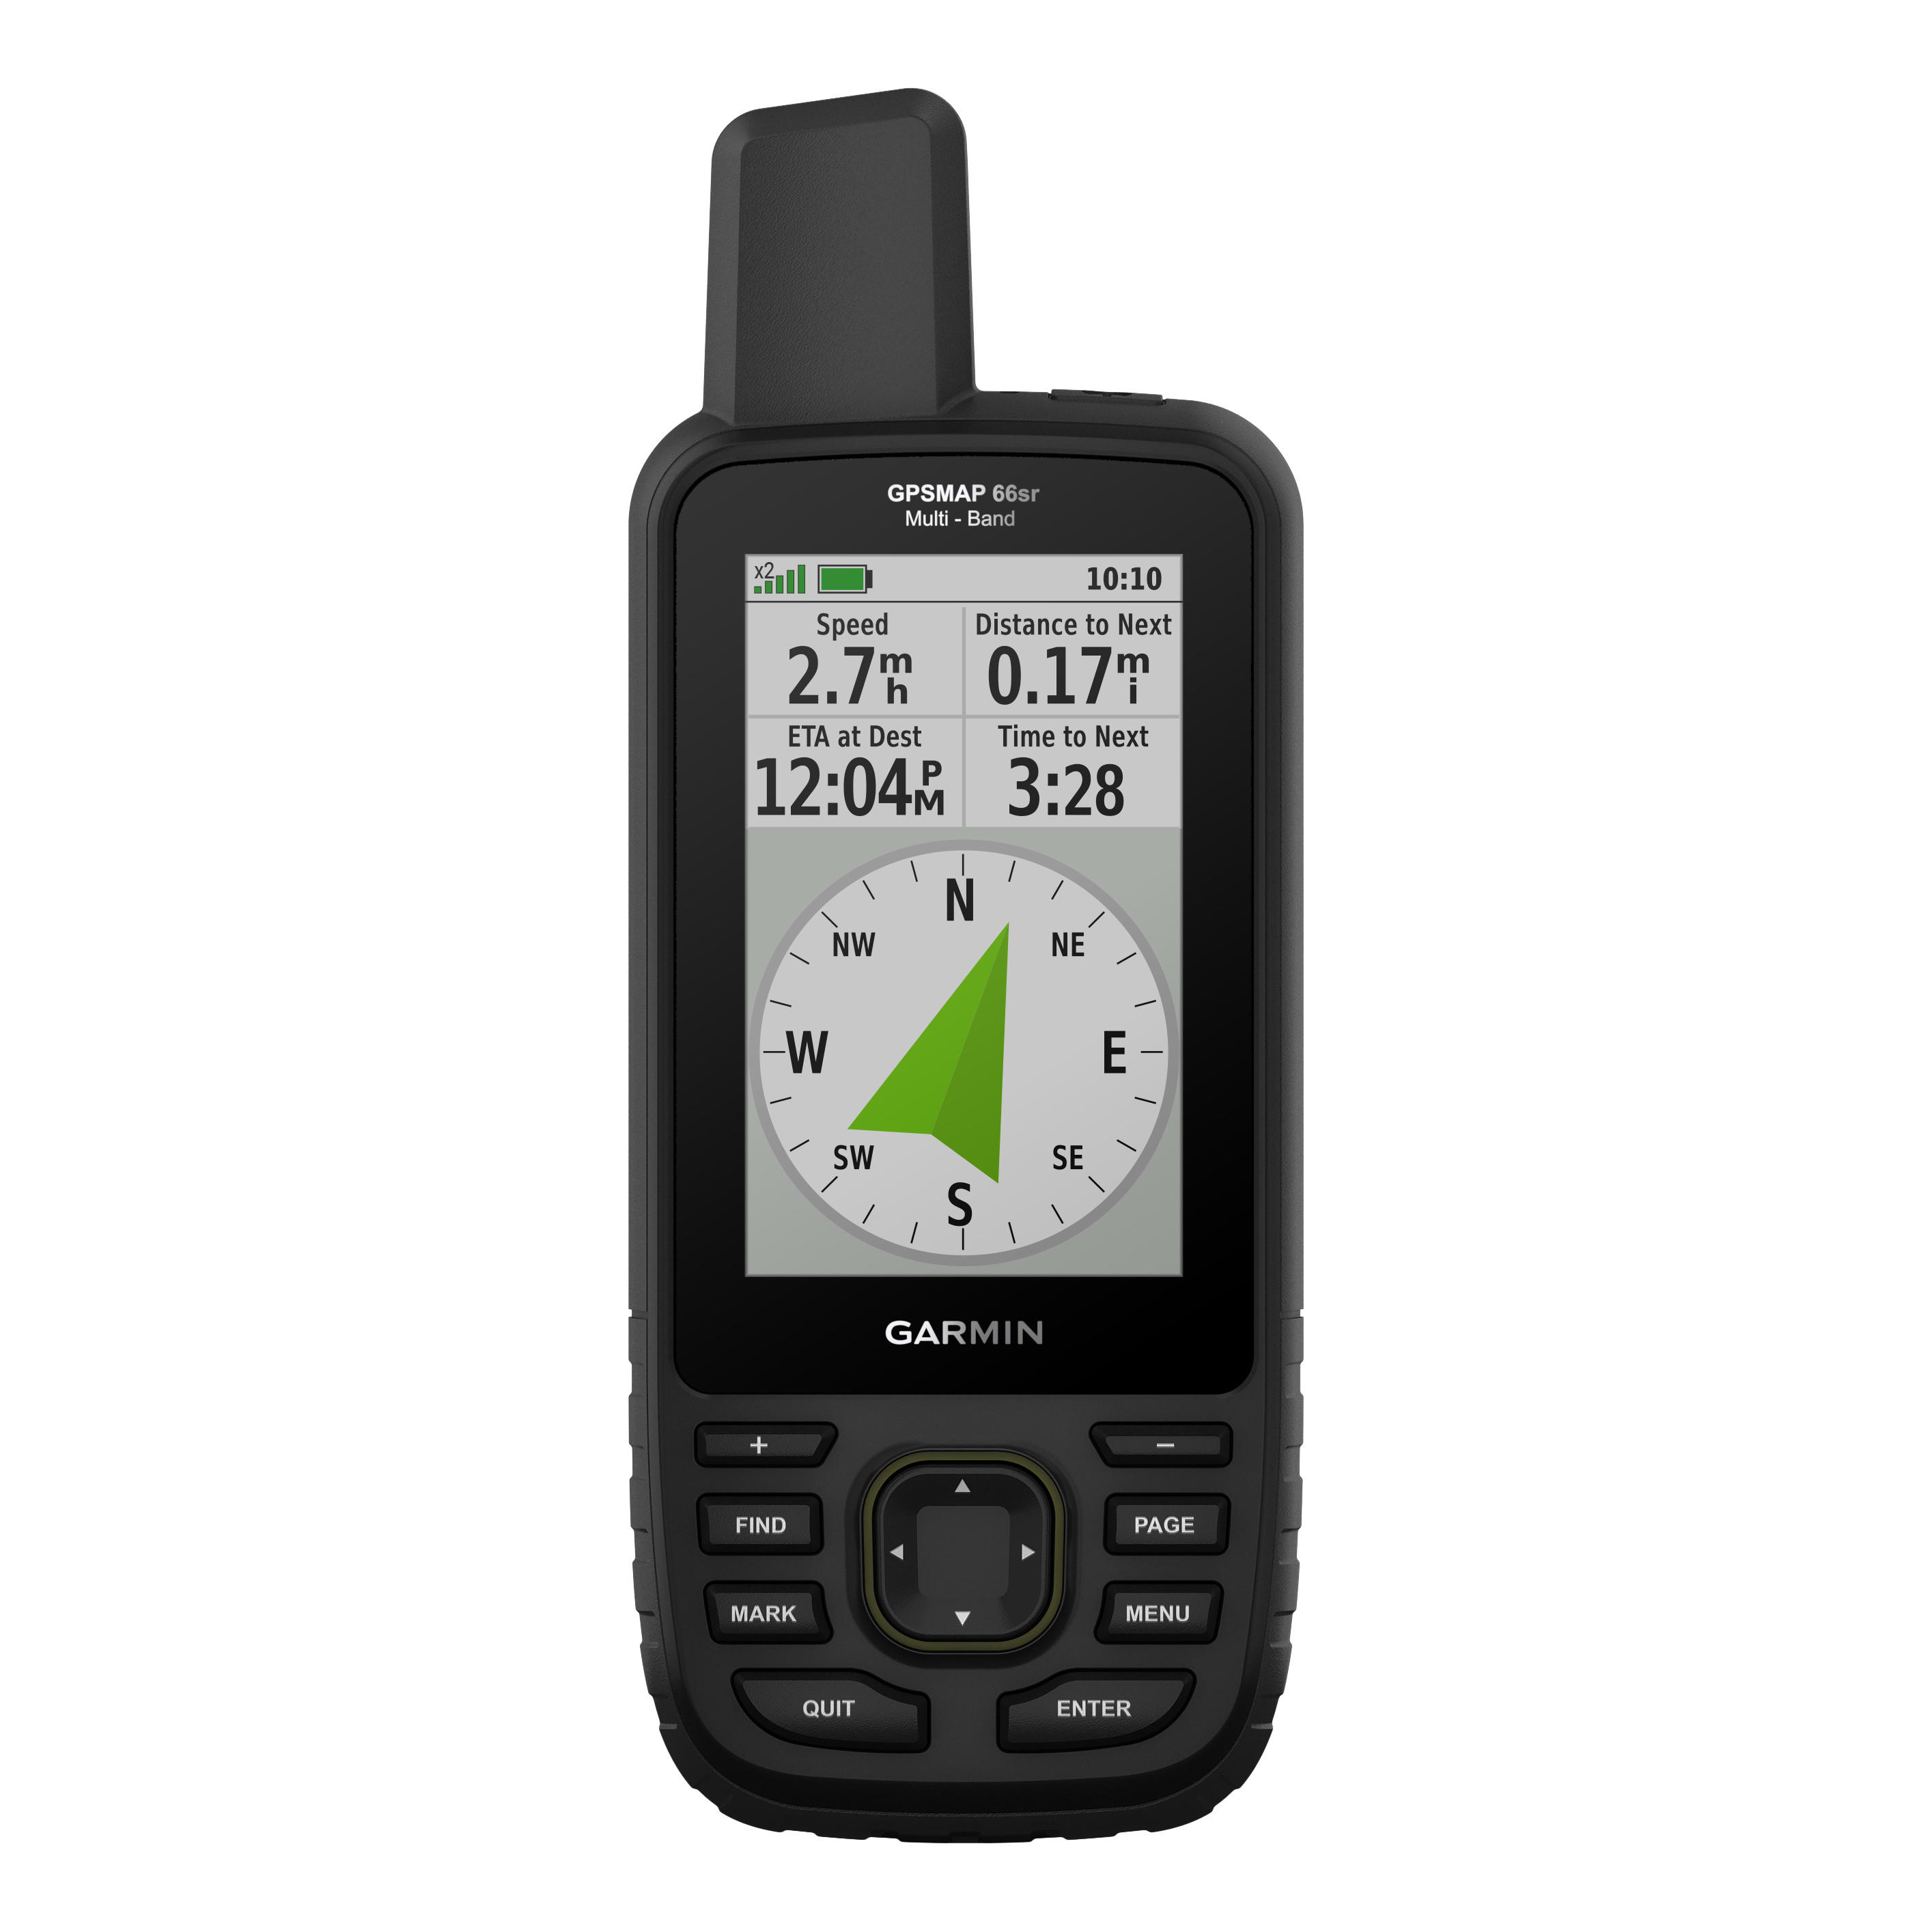 Garmin® GPSMAP® 66sr Handheld GPS